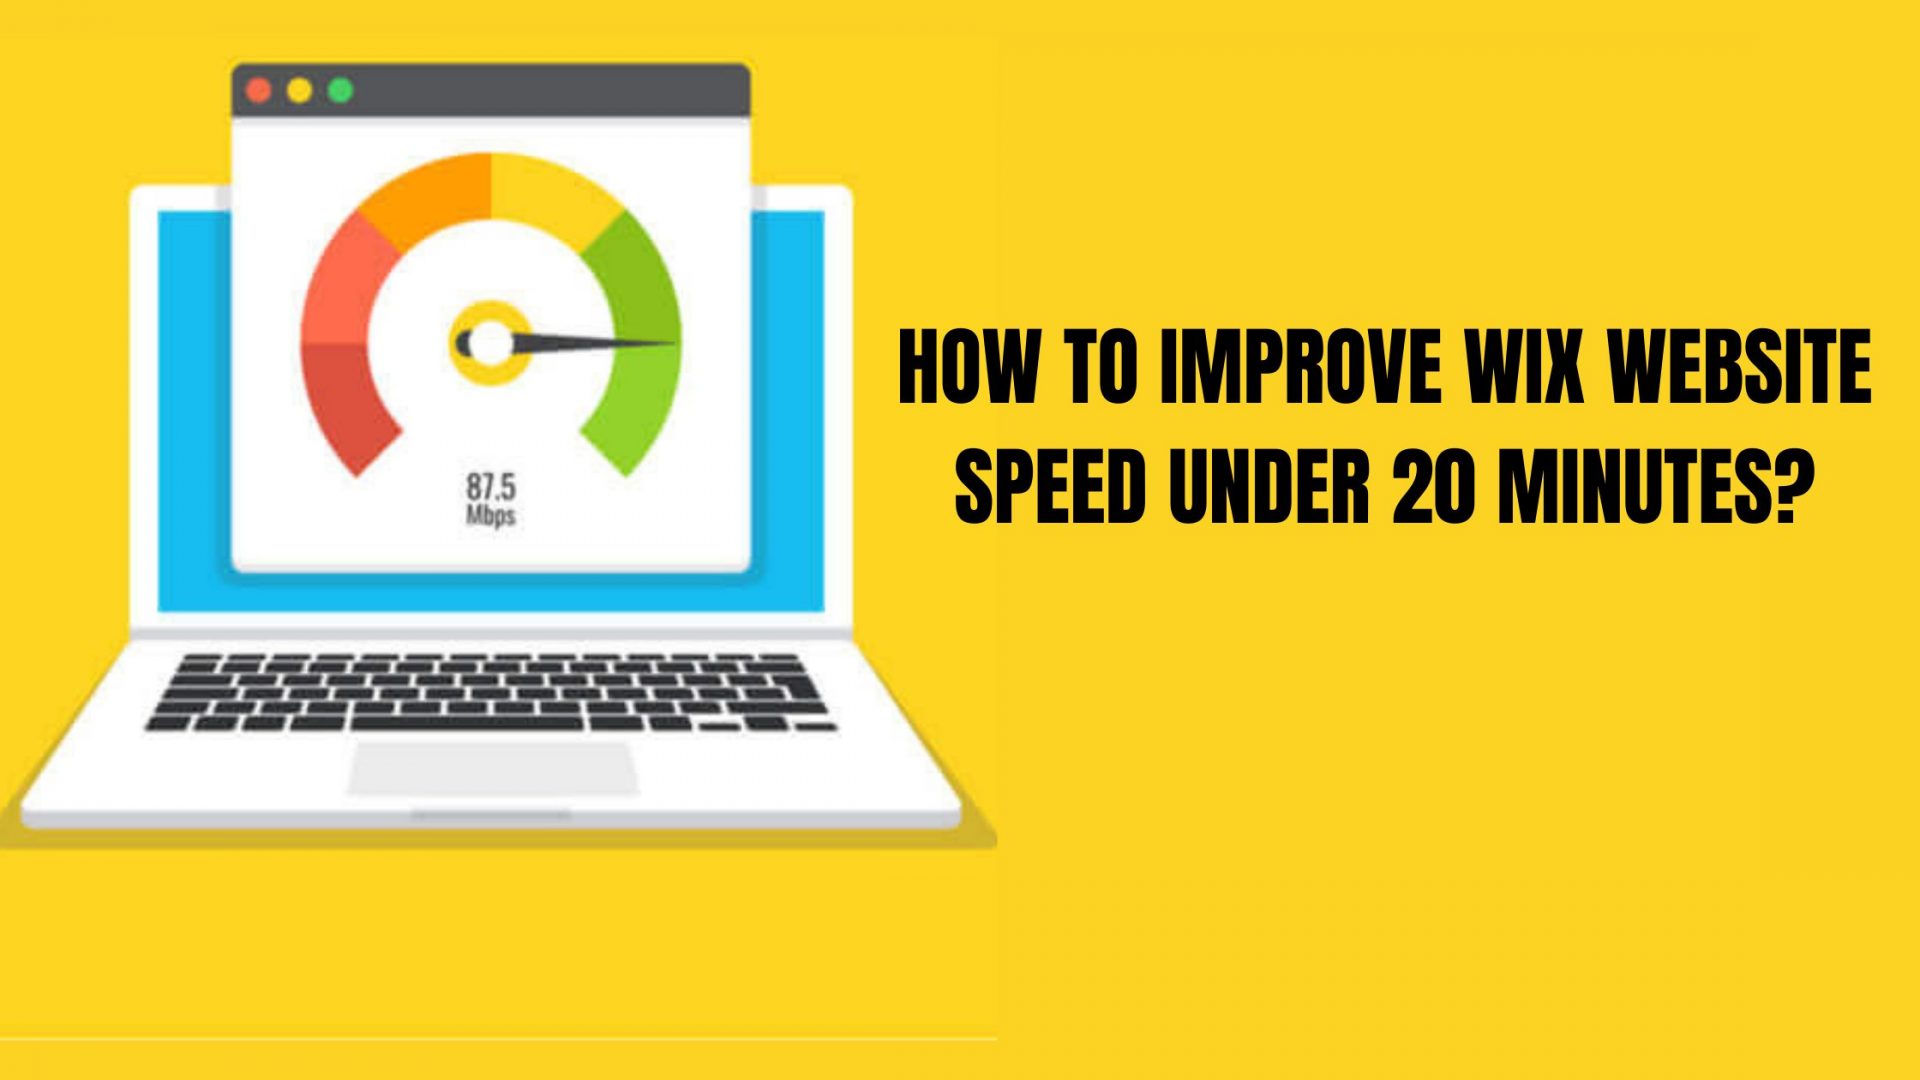 HOW TO IMPROVE WIX WEBSITE SPEED UNDER 20 MINUTES